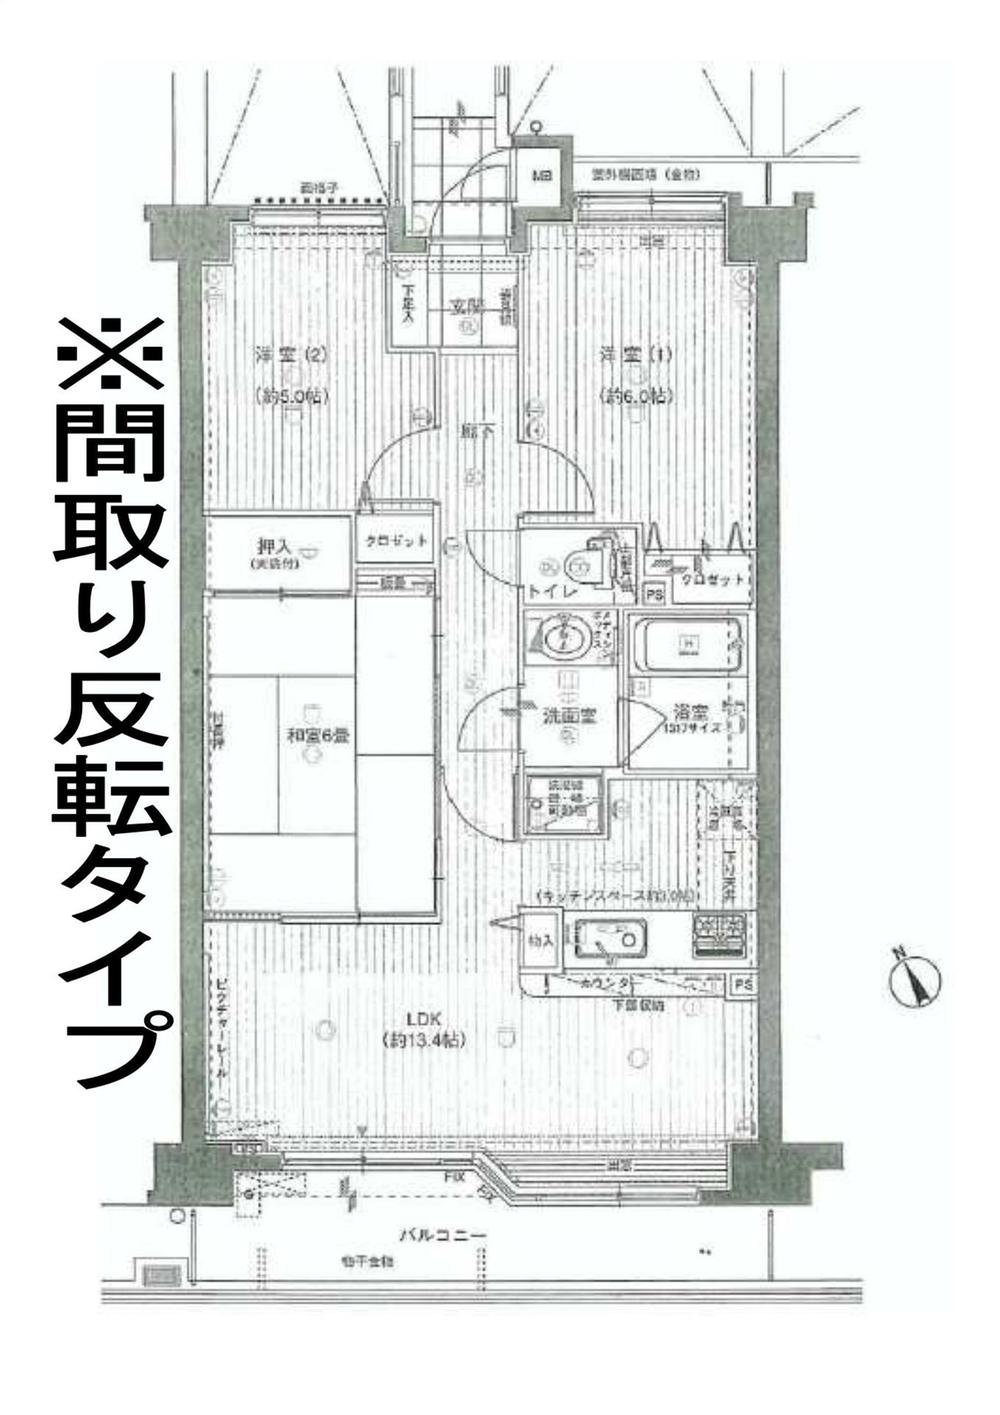 Floor plan. 3LDK, Price 28.8 million yen, Occupied area 65.67 sq m , Balcony area 8.25 sq m